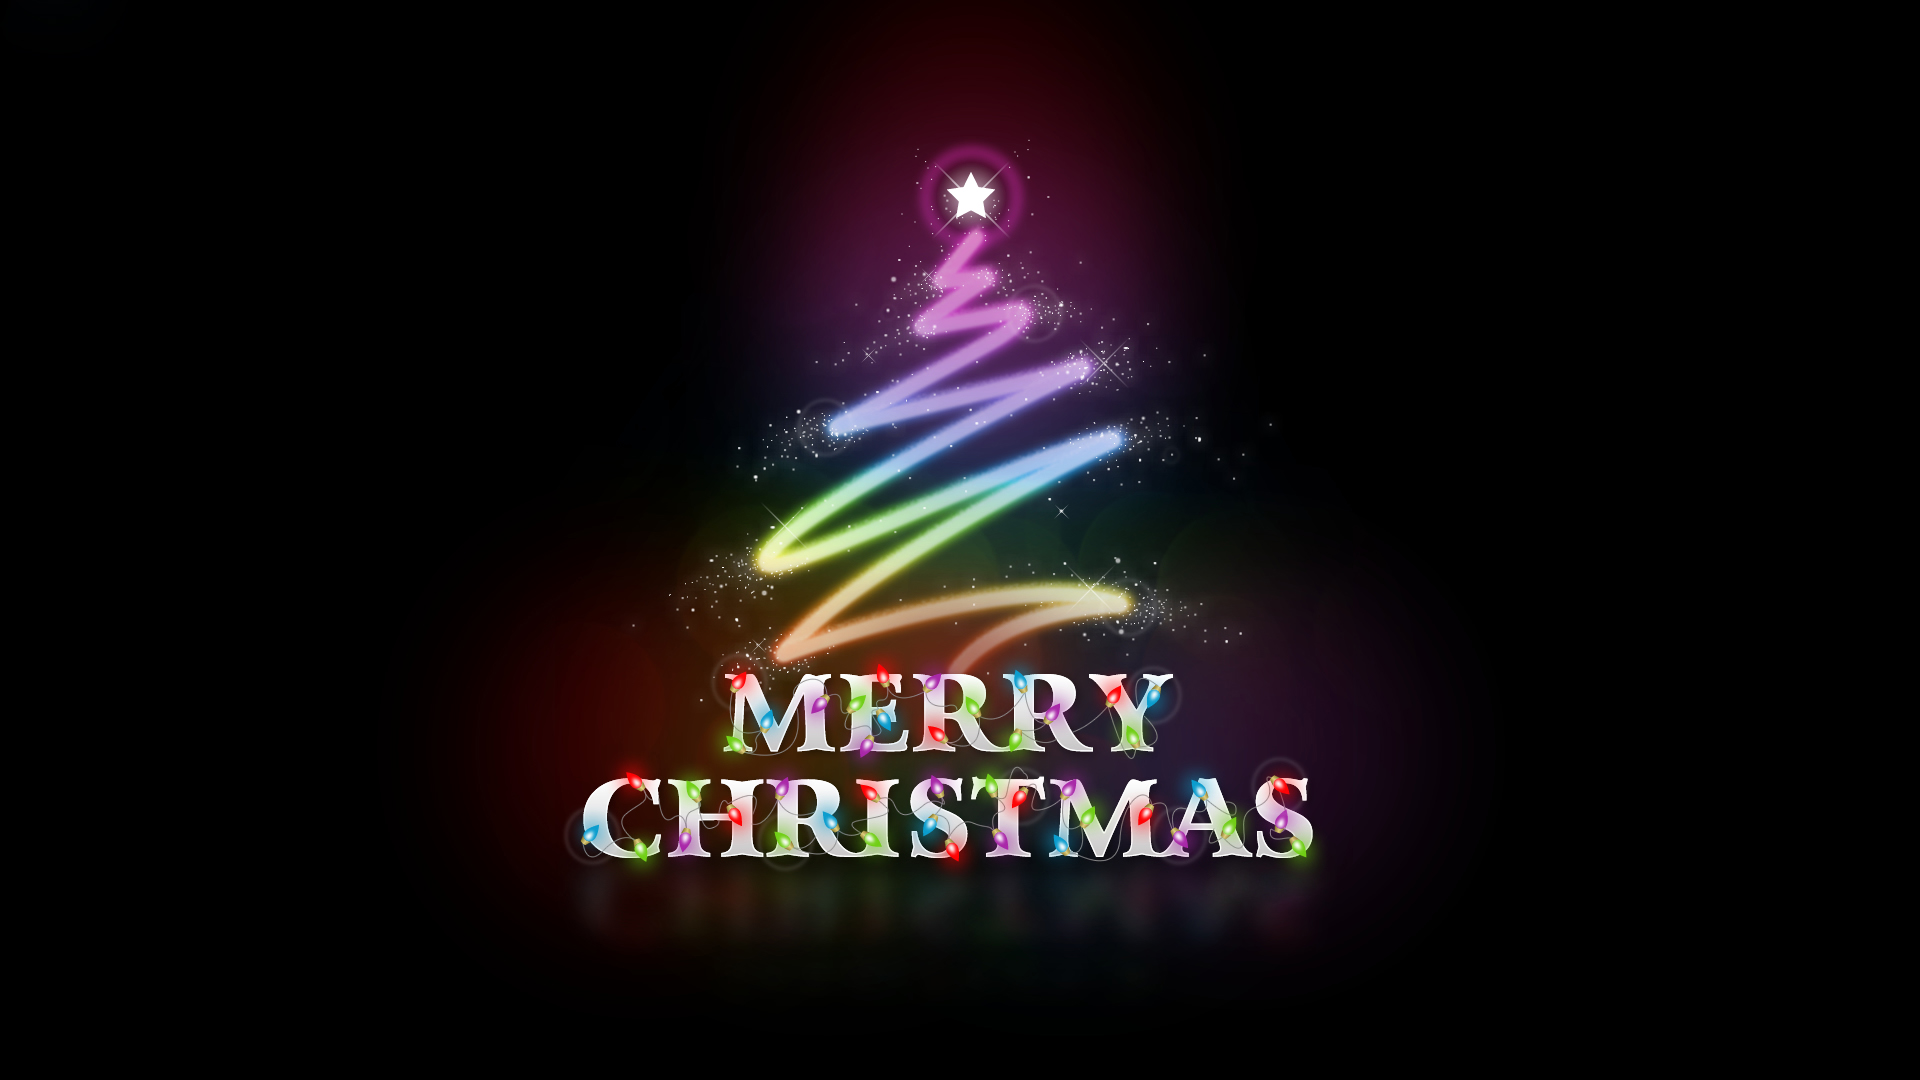 Merry Christmas Wallpapers Hd 2017 Free Download Pixelstalknet